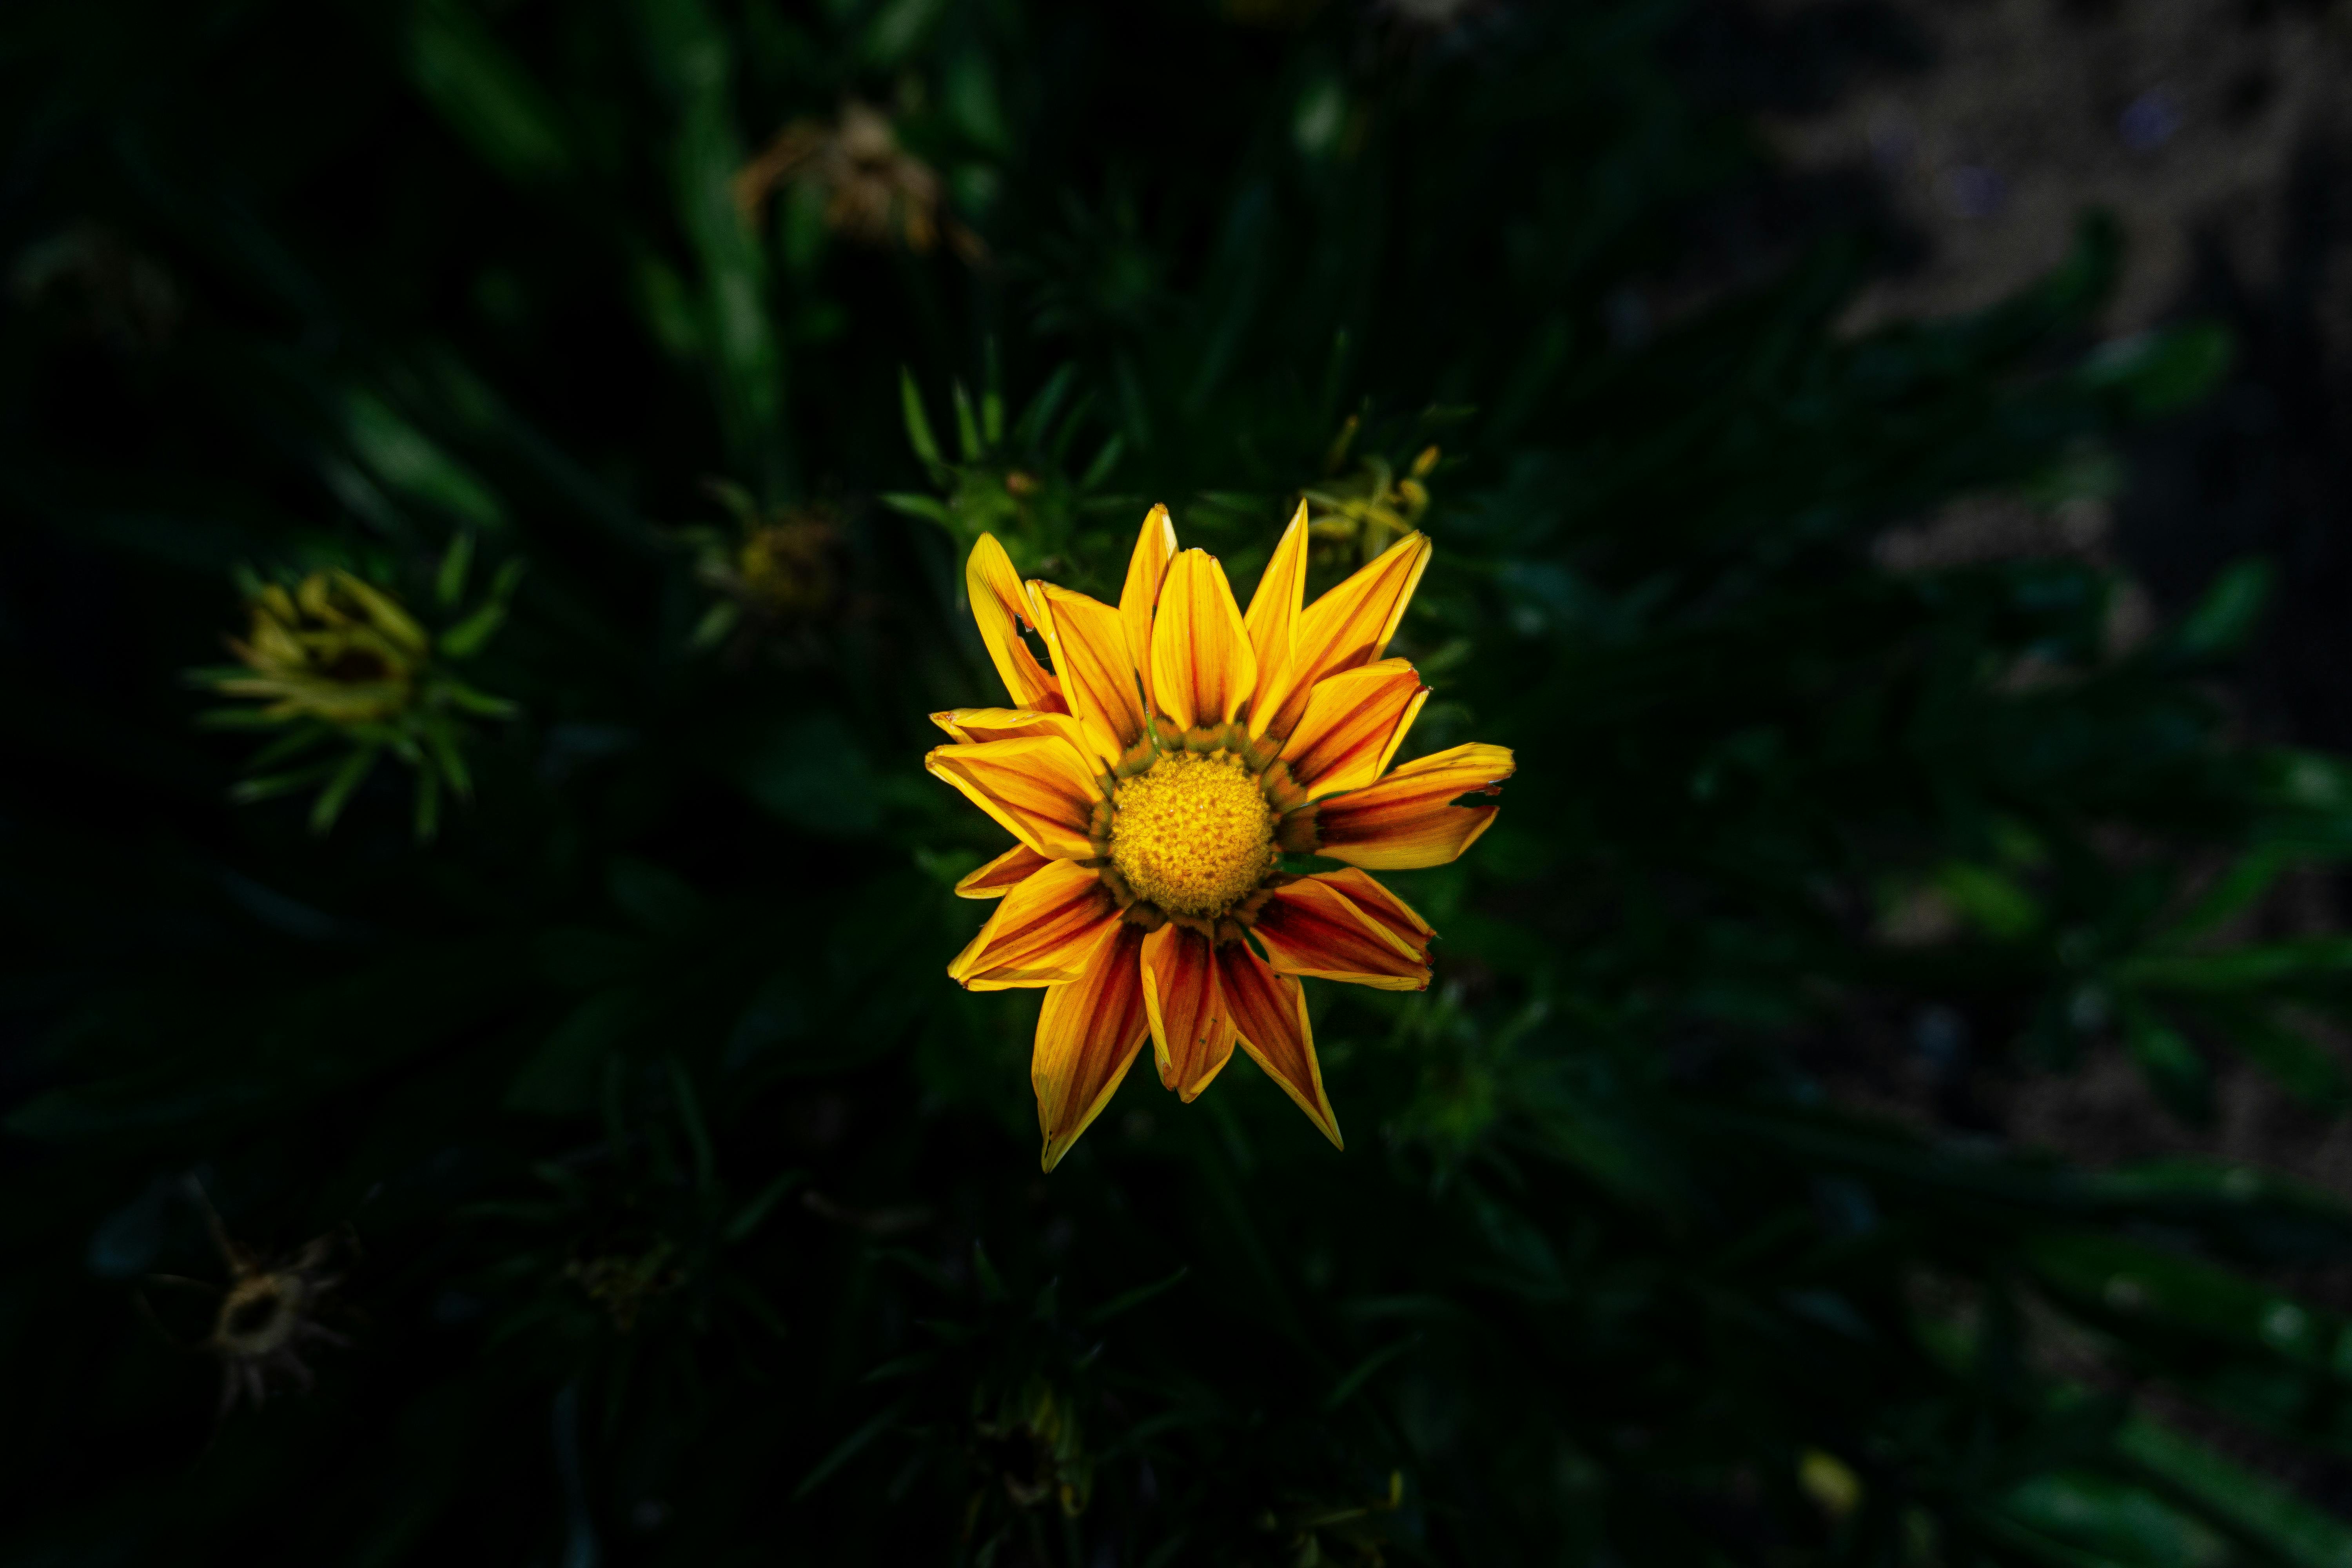 Red and Yellow Gazamia Flower · Free Stock Photo